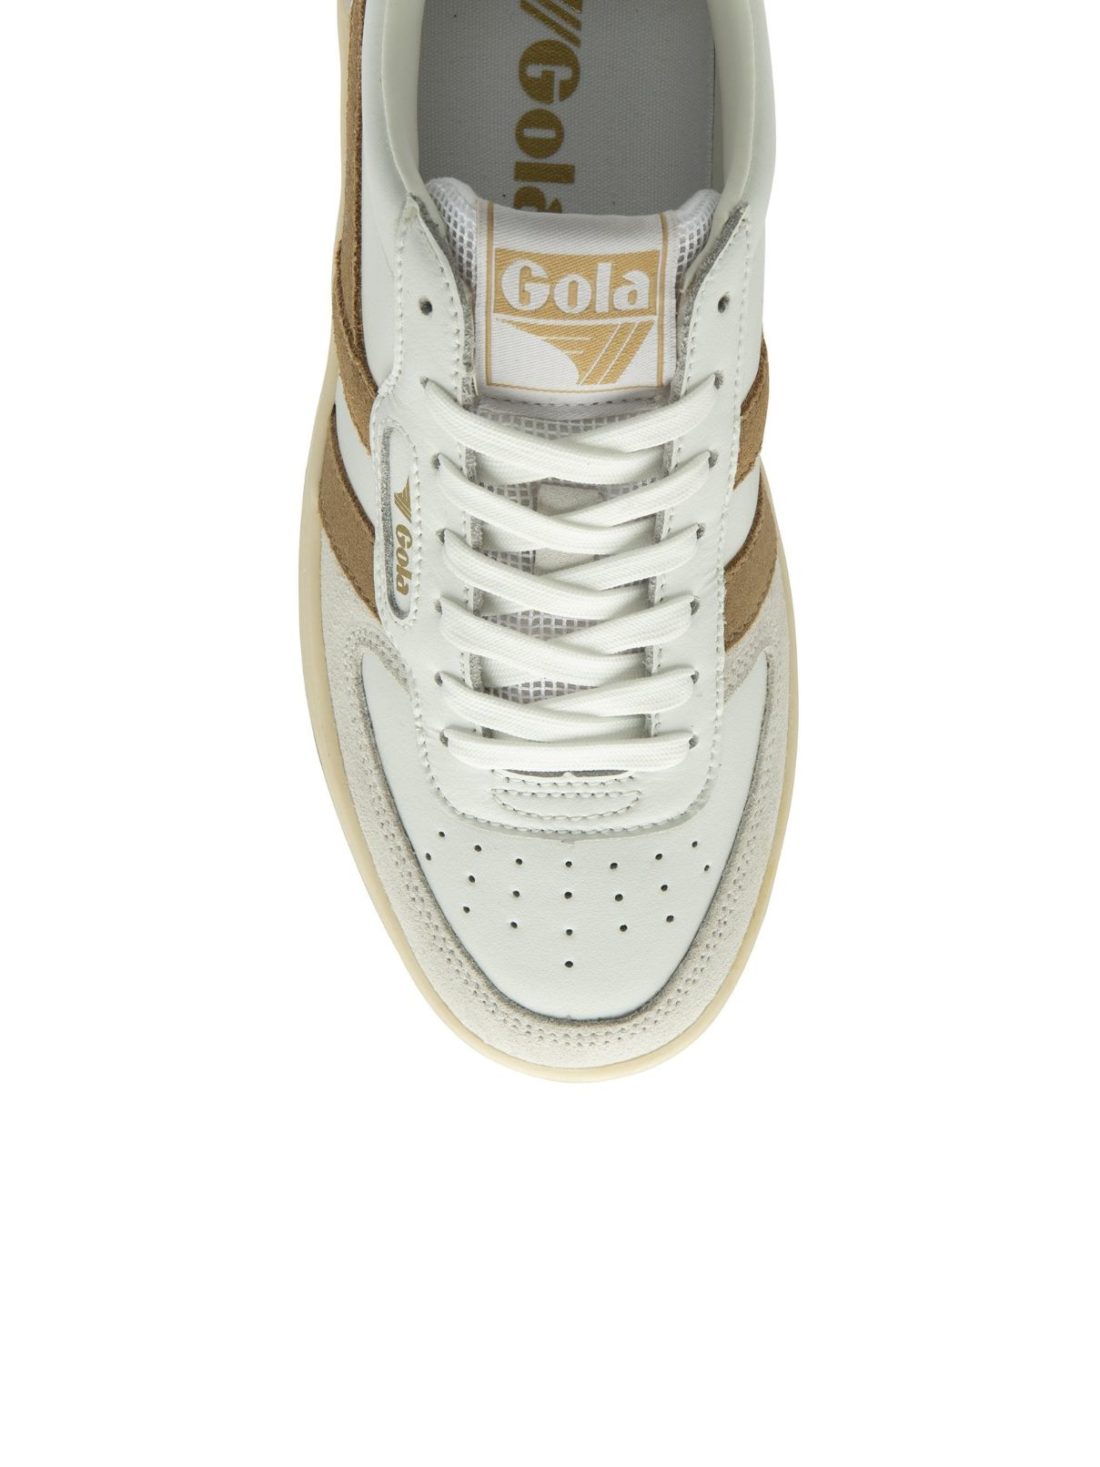 gola hawk sneaker in white/lt caramel/gold